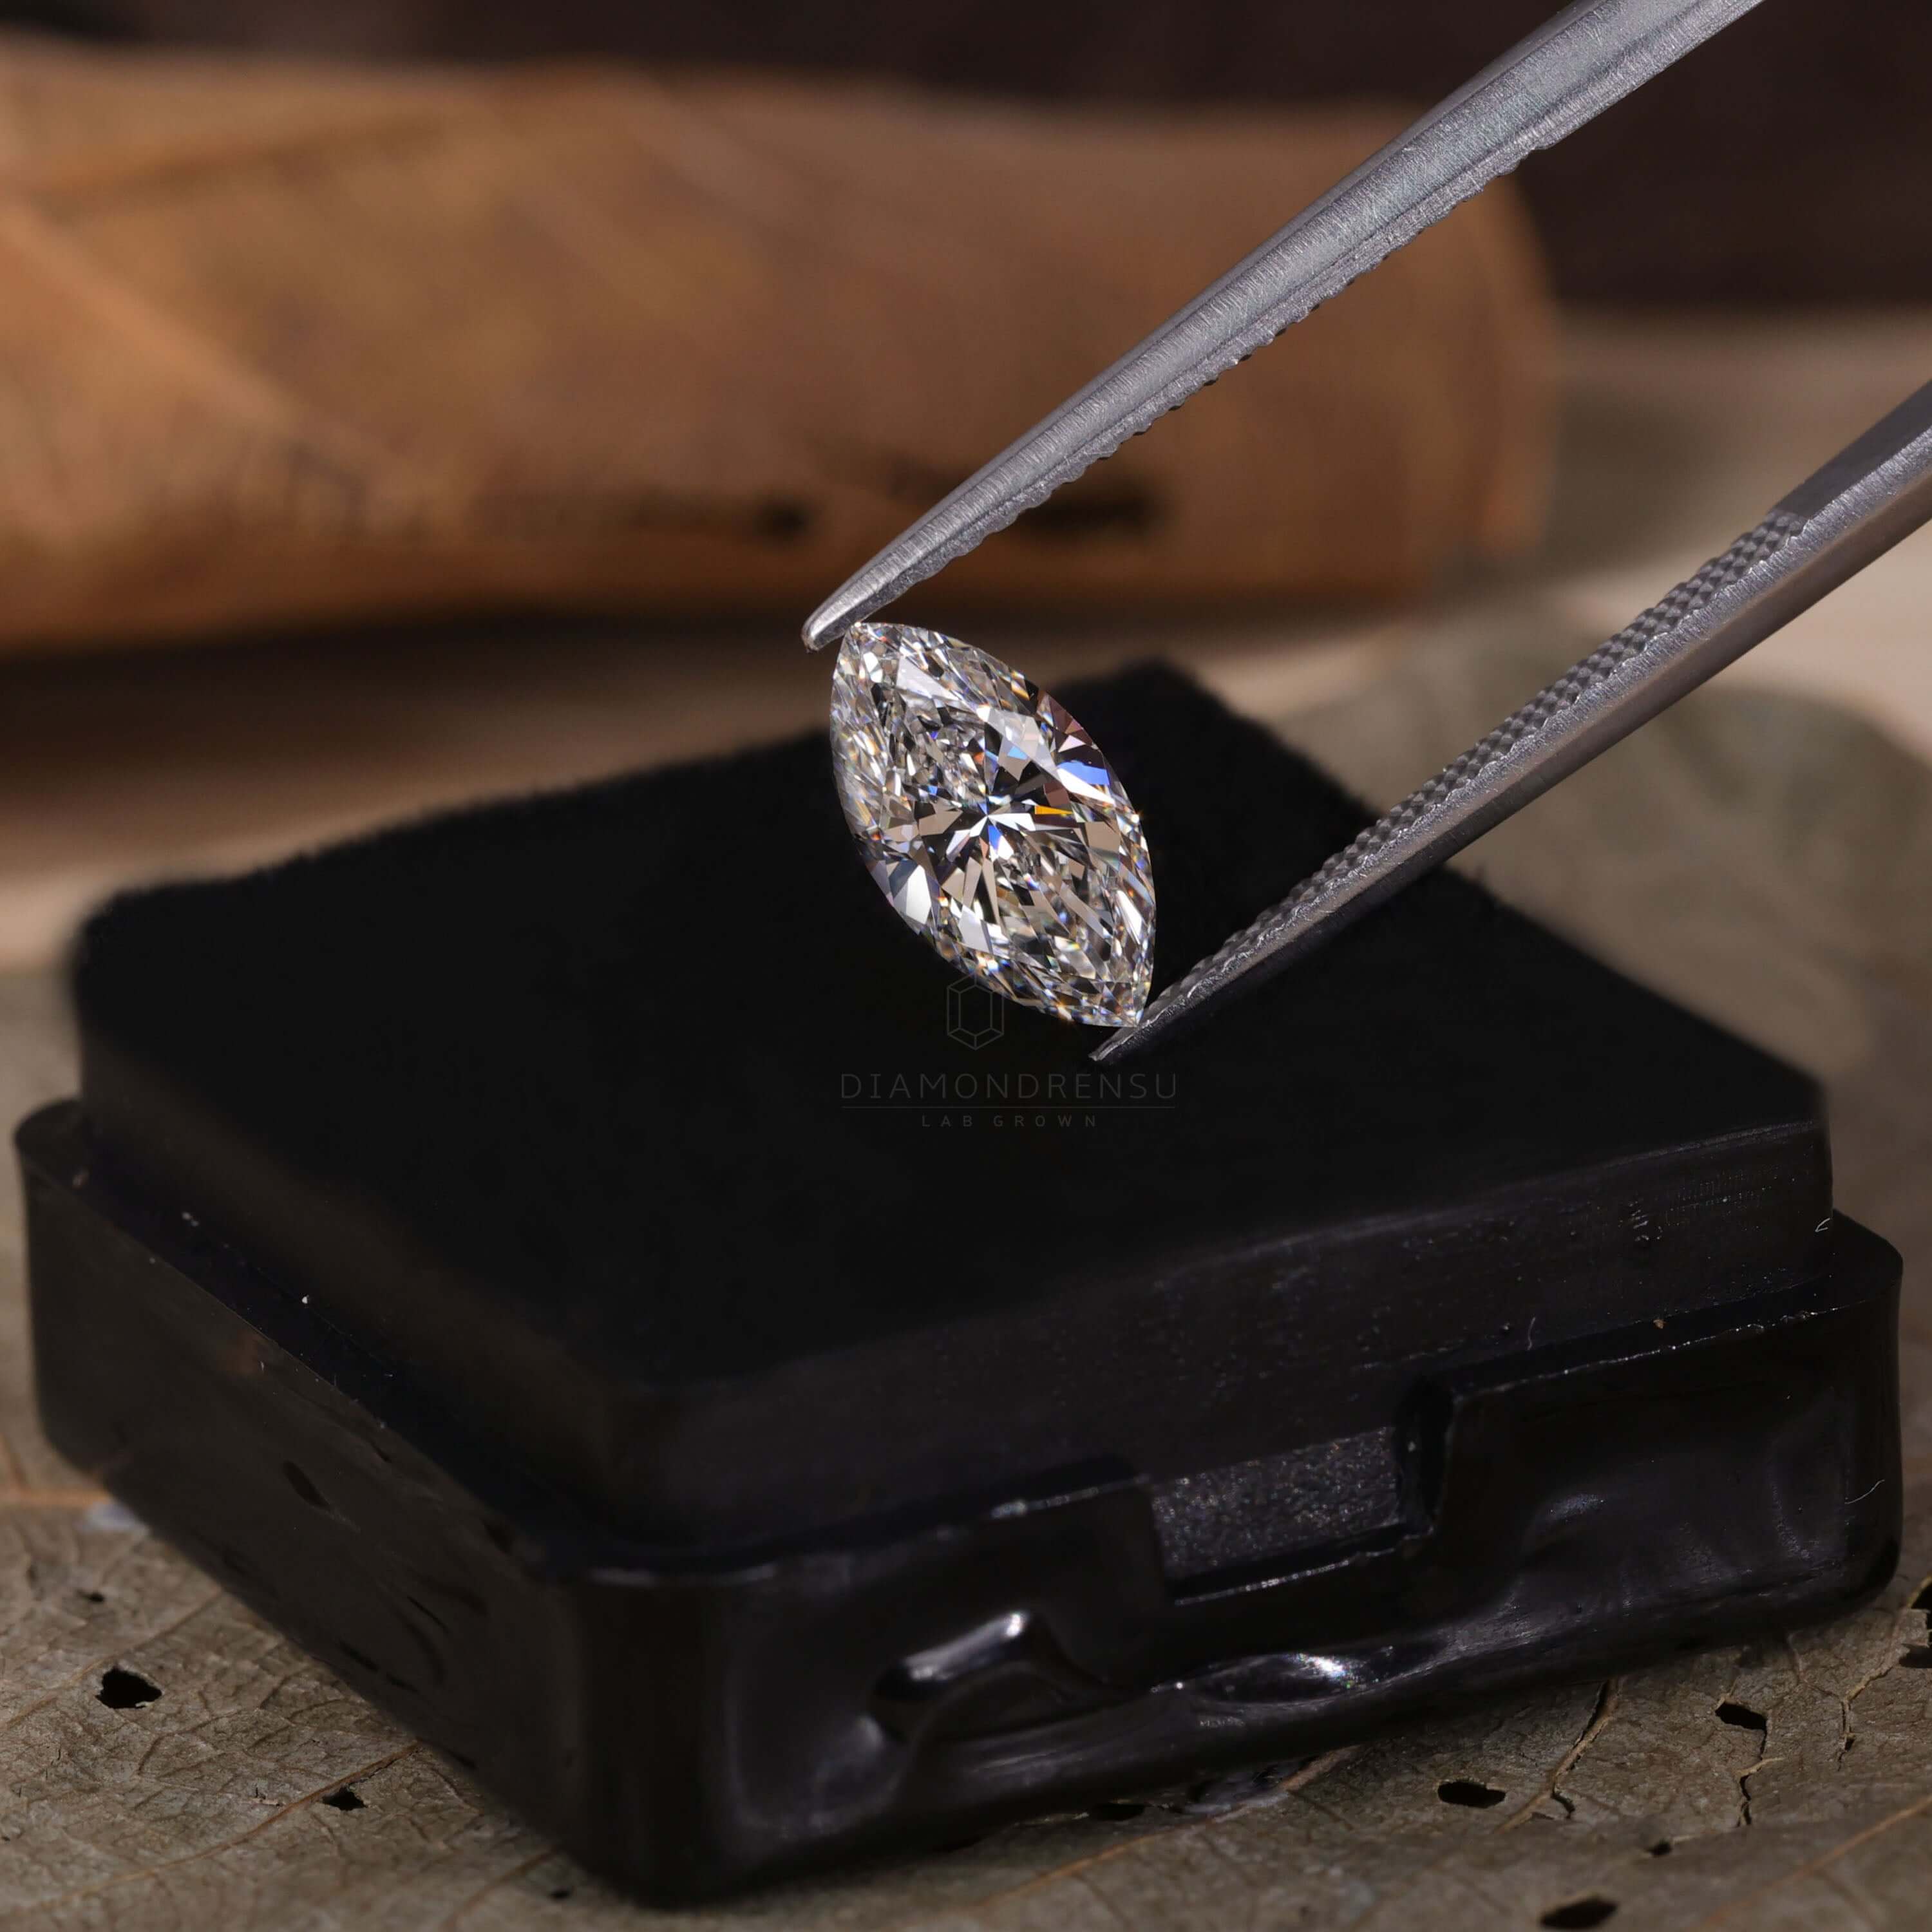 marquise cut diamond - diamondrensu